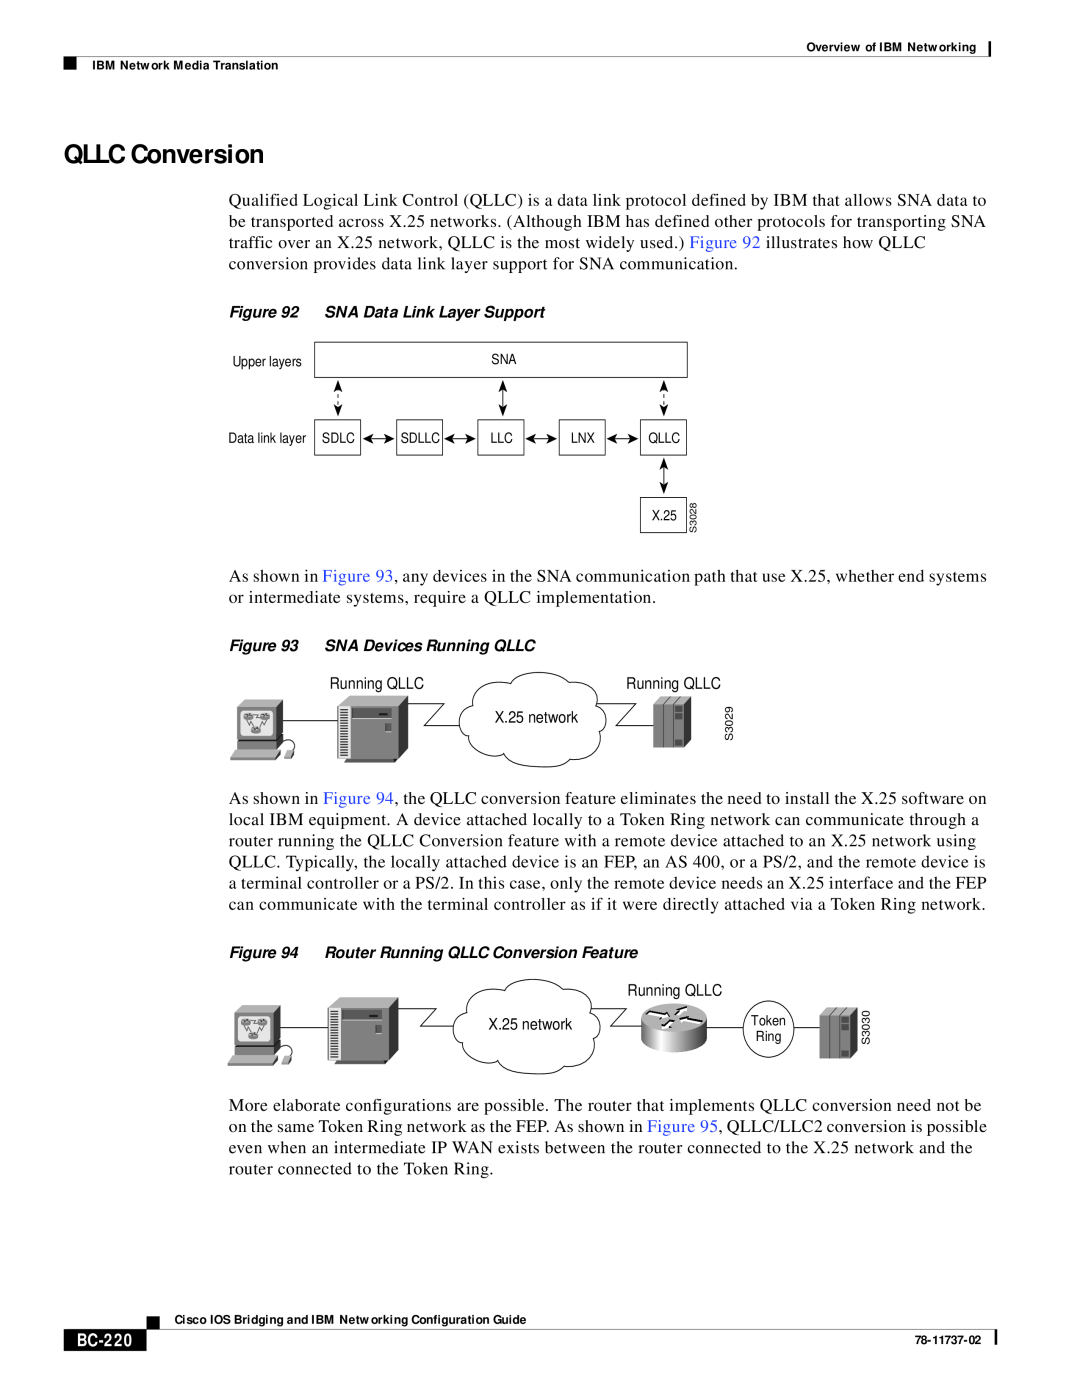 IBM BC-201 manual QLLC Conversion, BC-220 